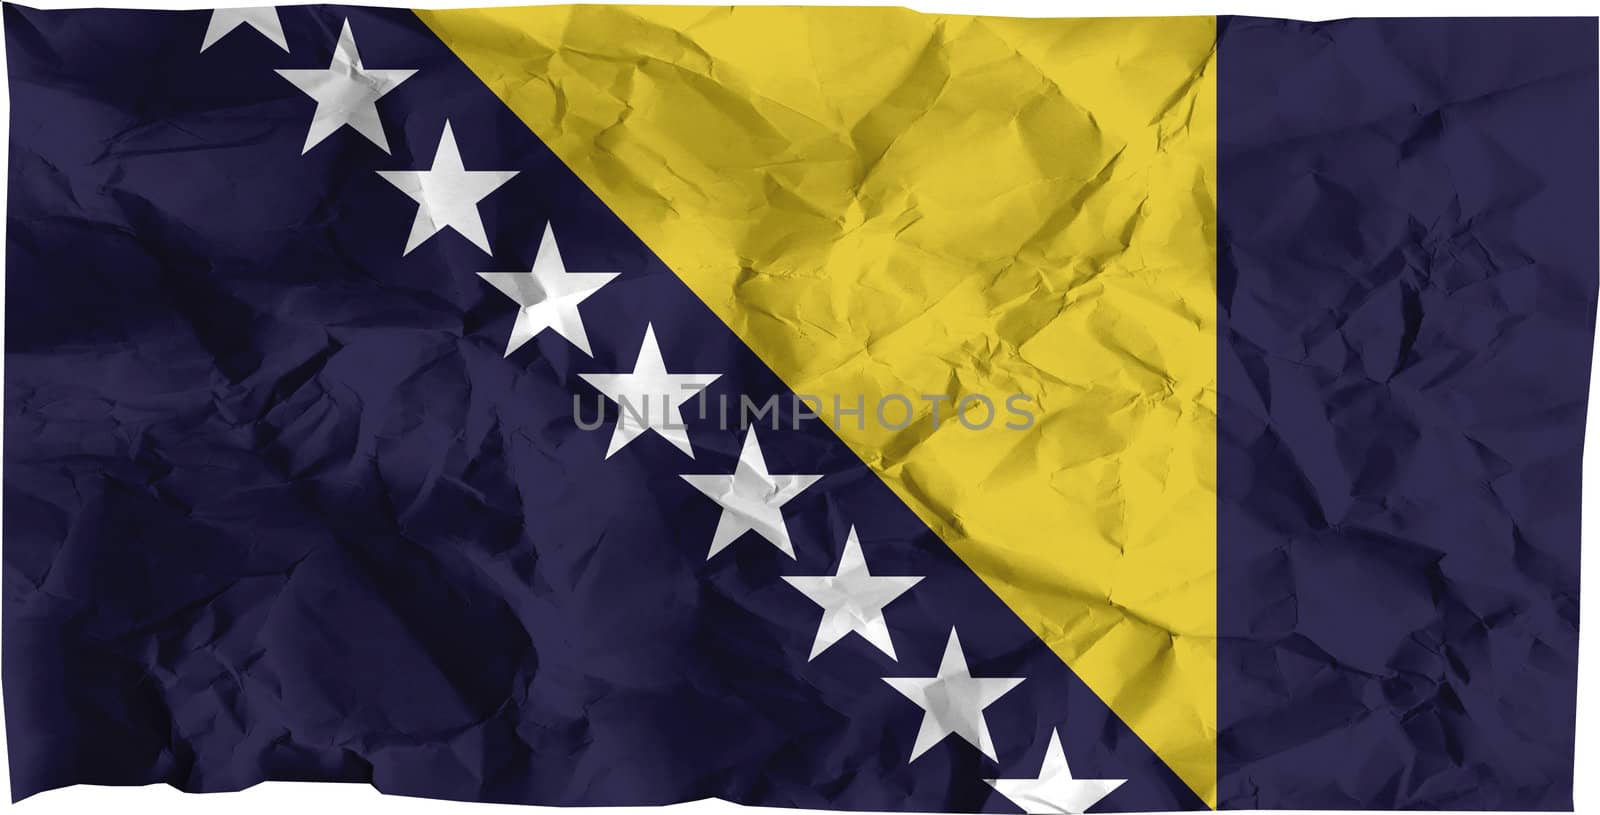 The flag of Bosnia and Herzegovina.